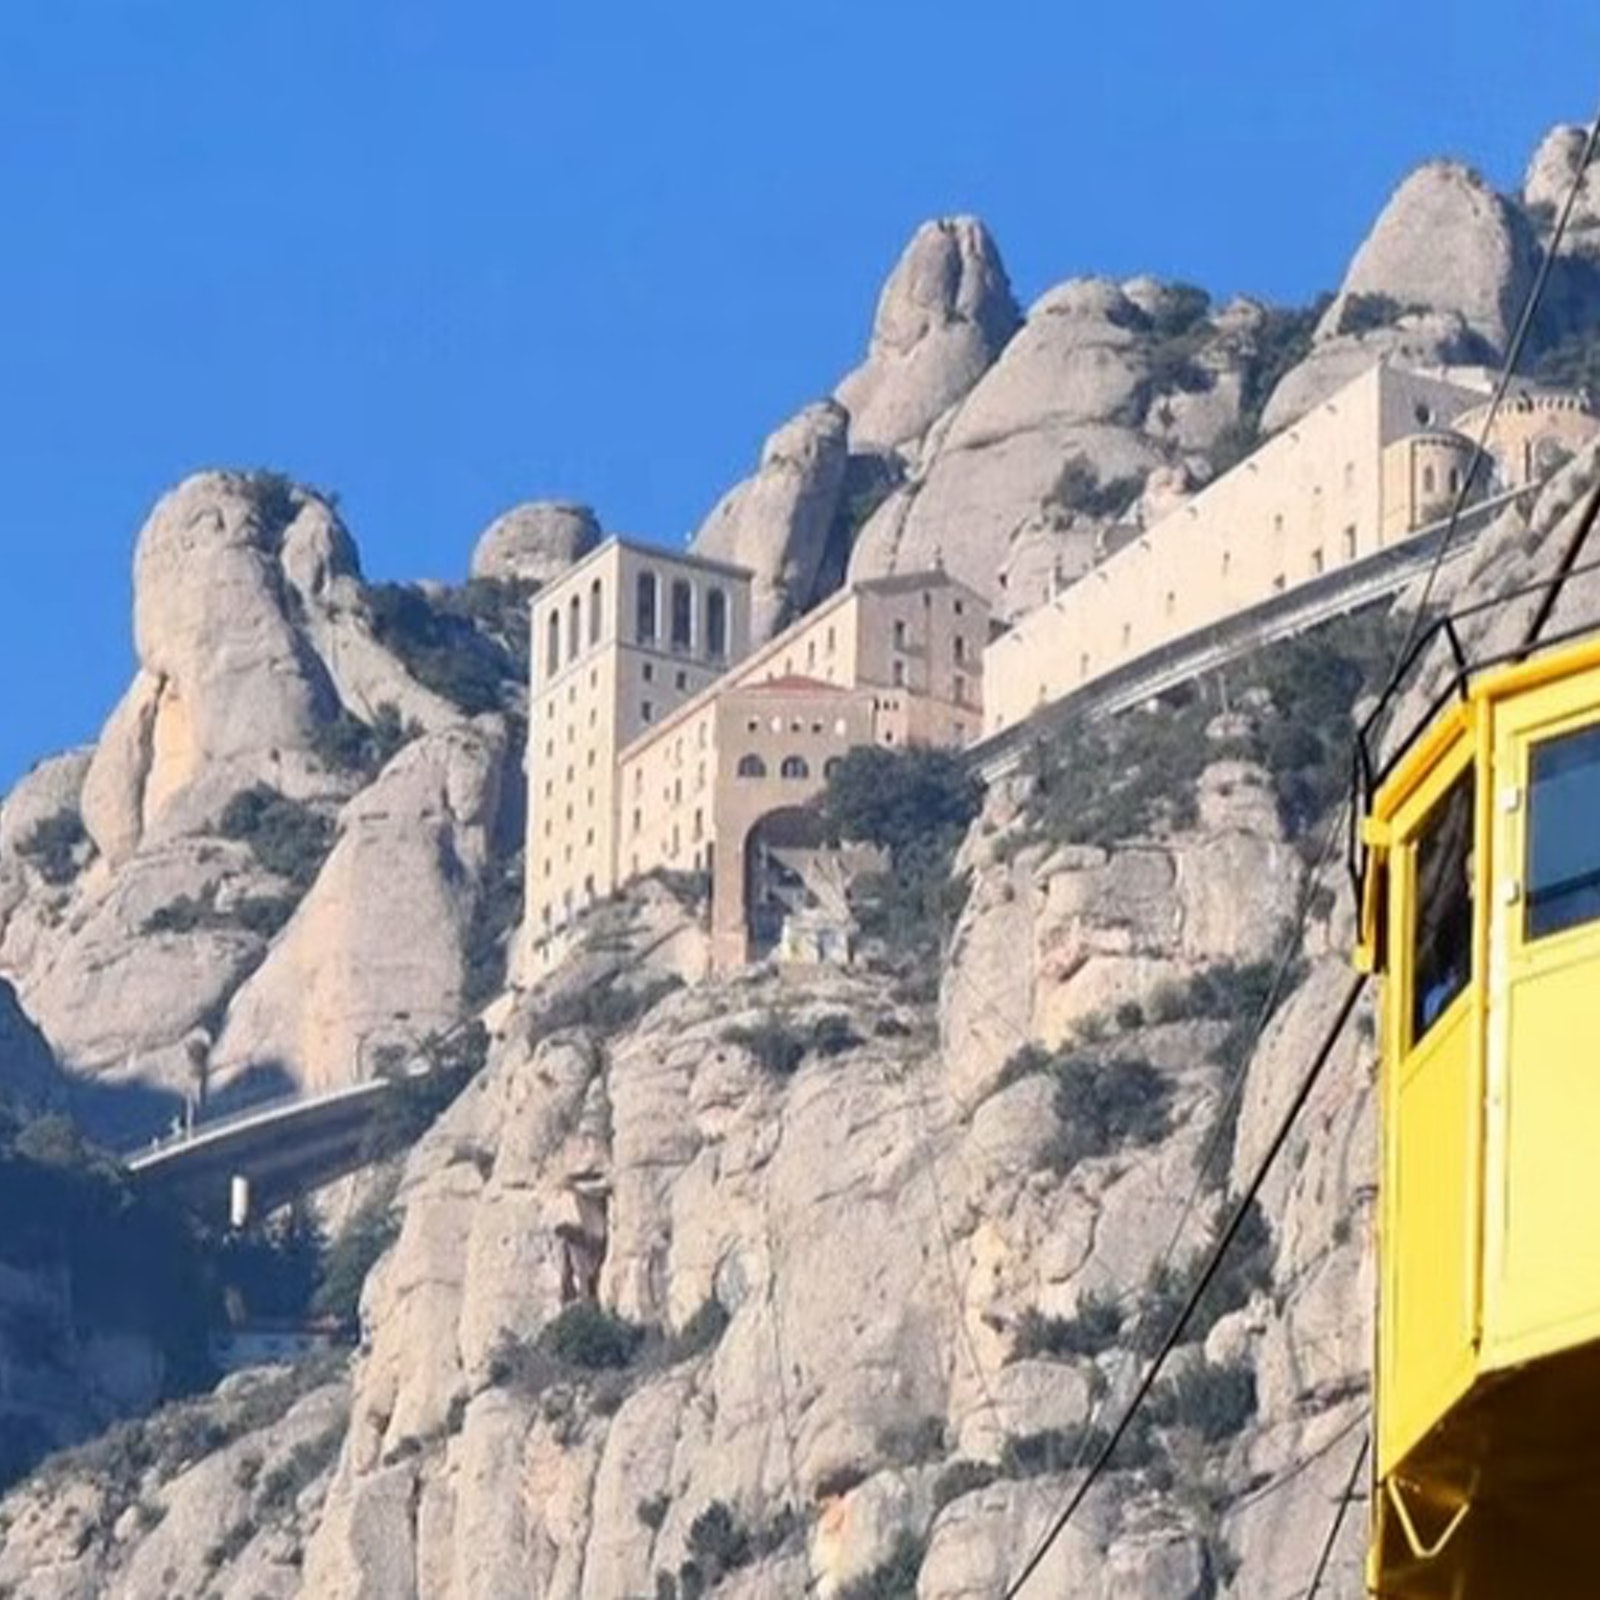 Montserrat Cable Car: Descent and Ascent in Spain